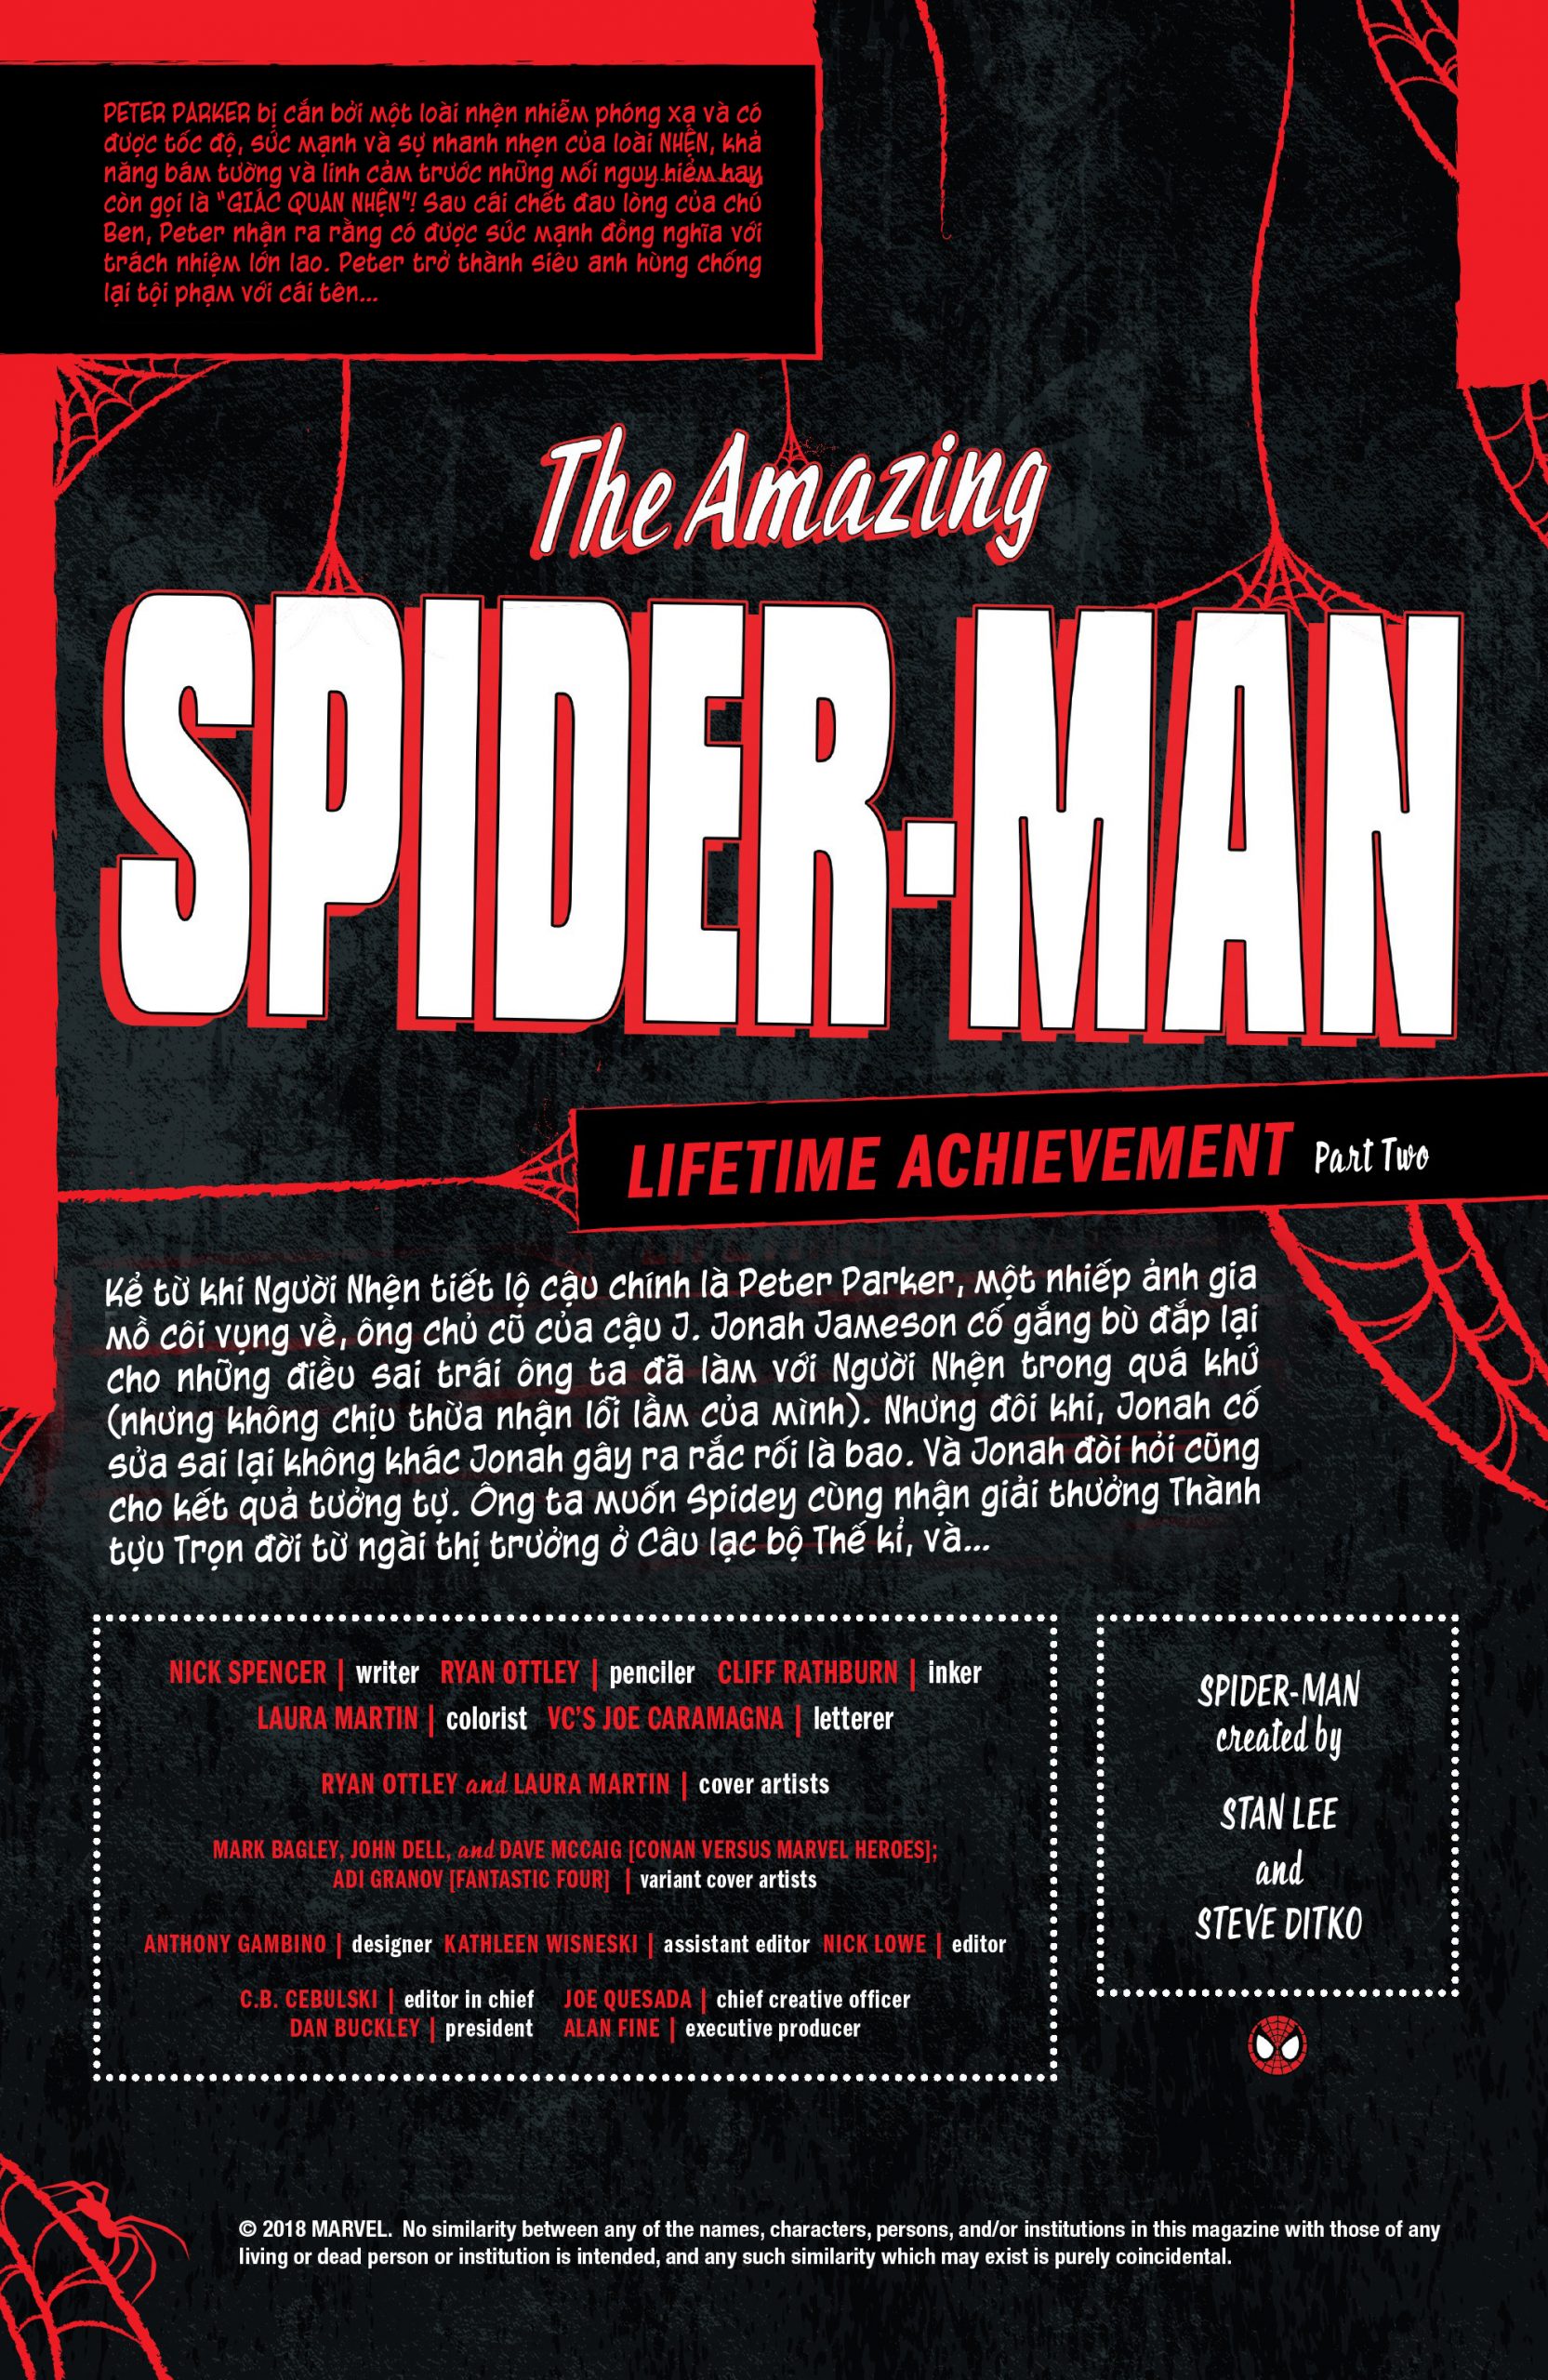 https://langgeek.net/wp-content/webpc-passthru.php?src=https://langgeek.net/wp-content/uploads/2021/11/Amazing-Spider-Man-012-002-scaled.jpg&nocache=1